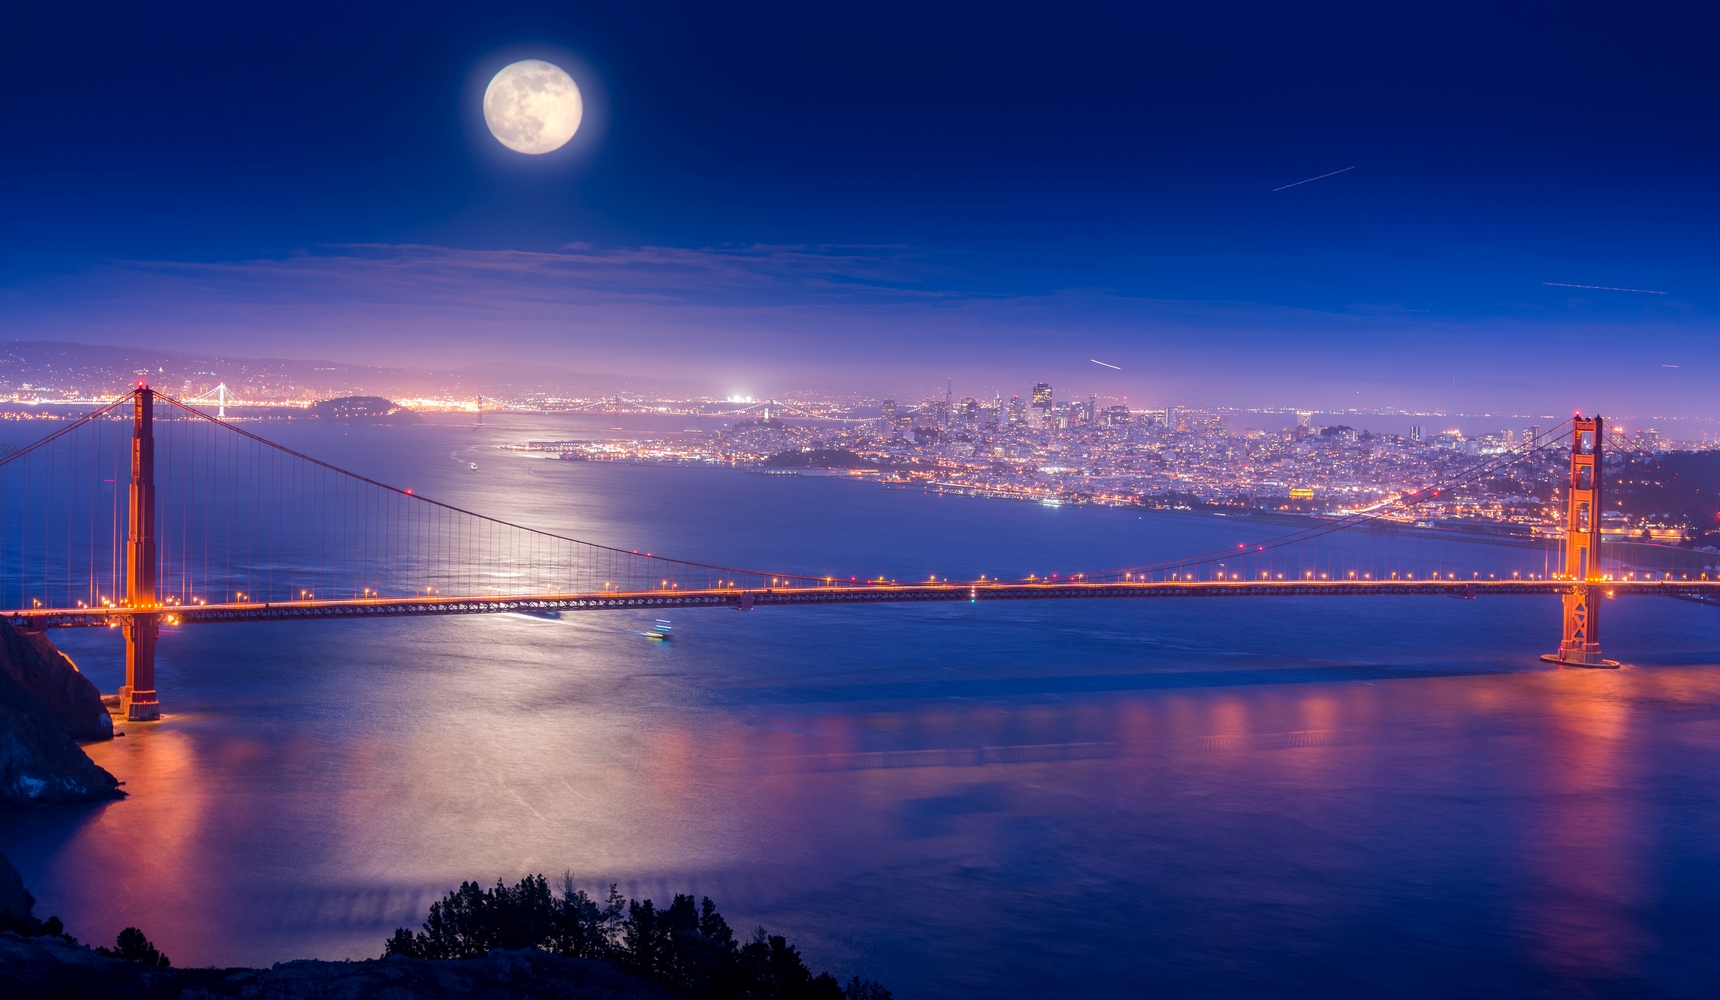 Moonrise Over The Golden Gate Bridge (Image)